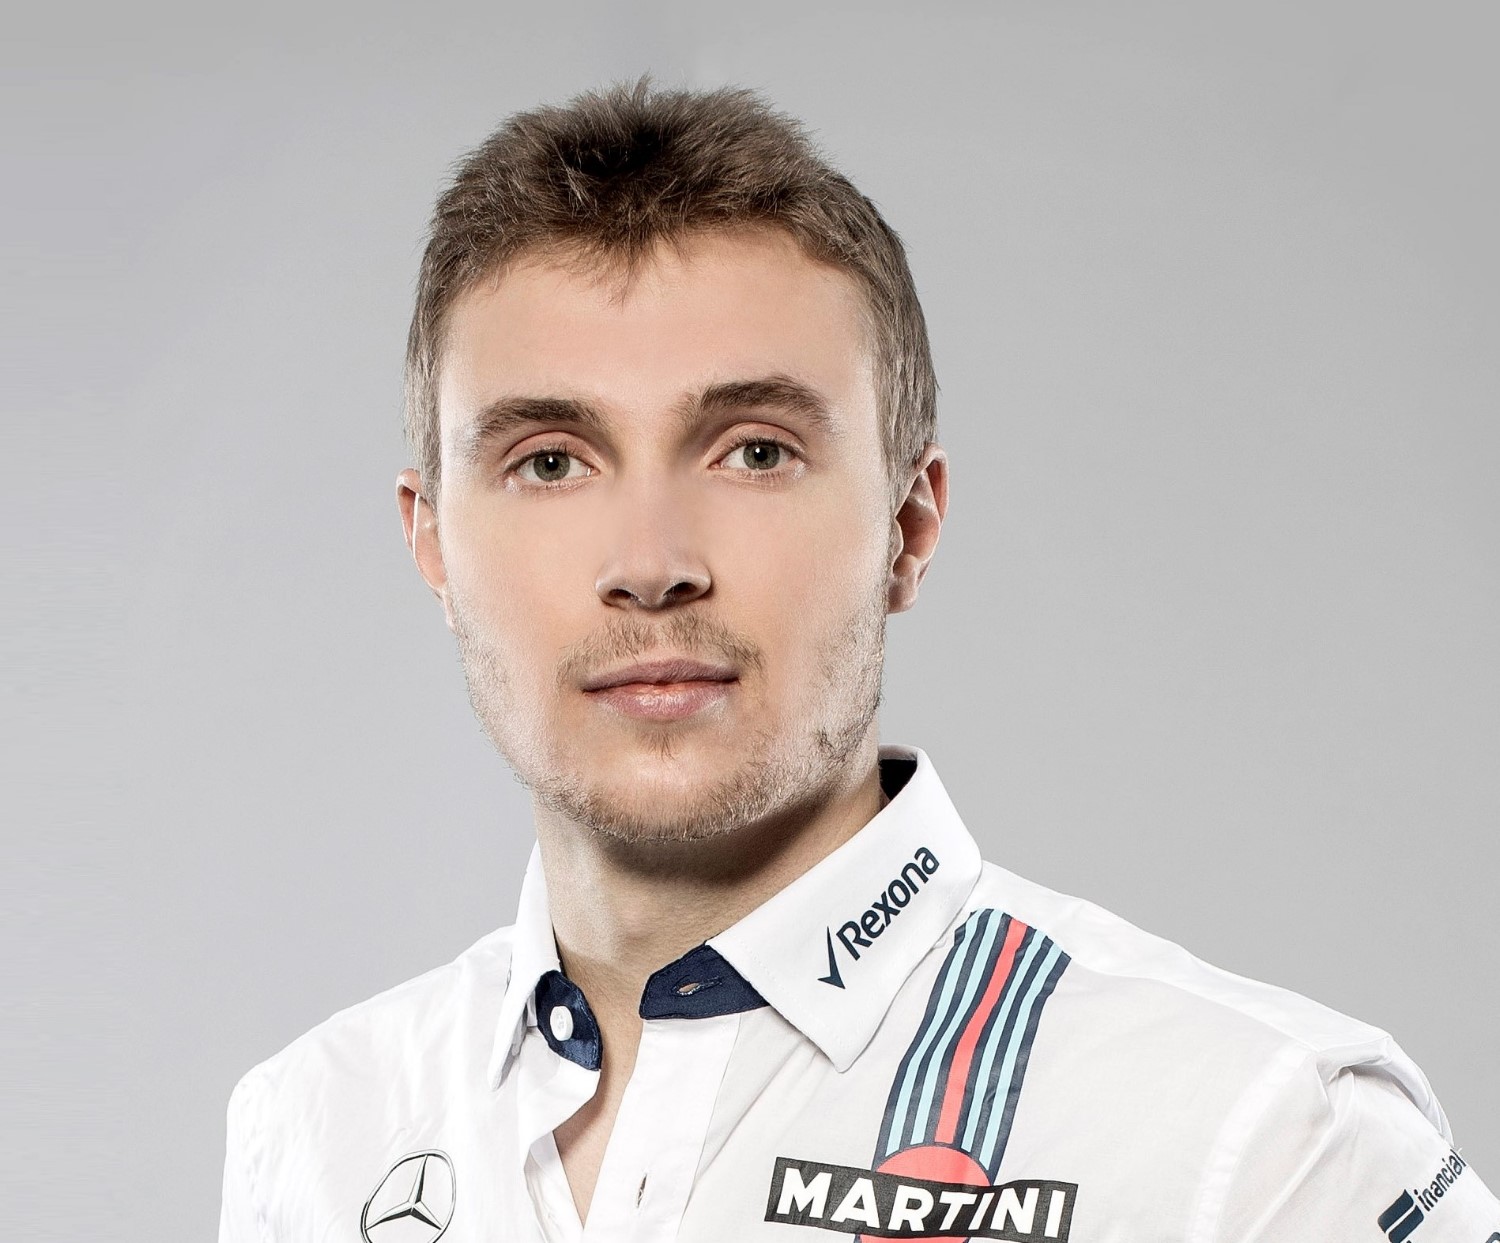 Will Sirothkin follow Russian IndyCar driver Mikhail Aleshin to IndyCar?